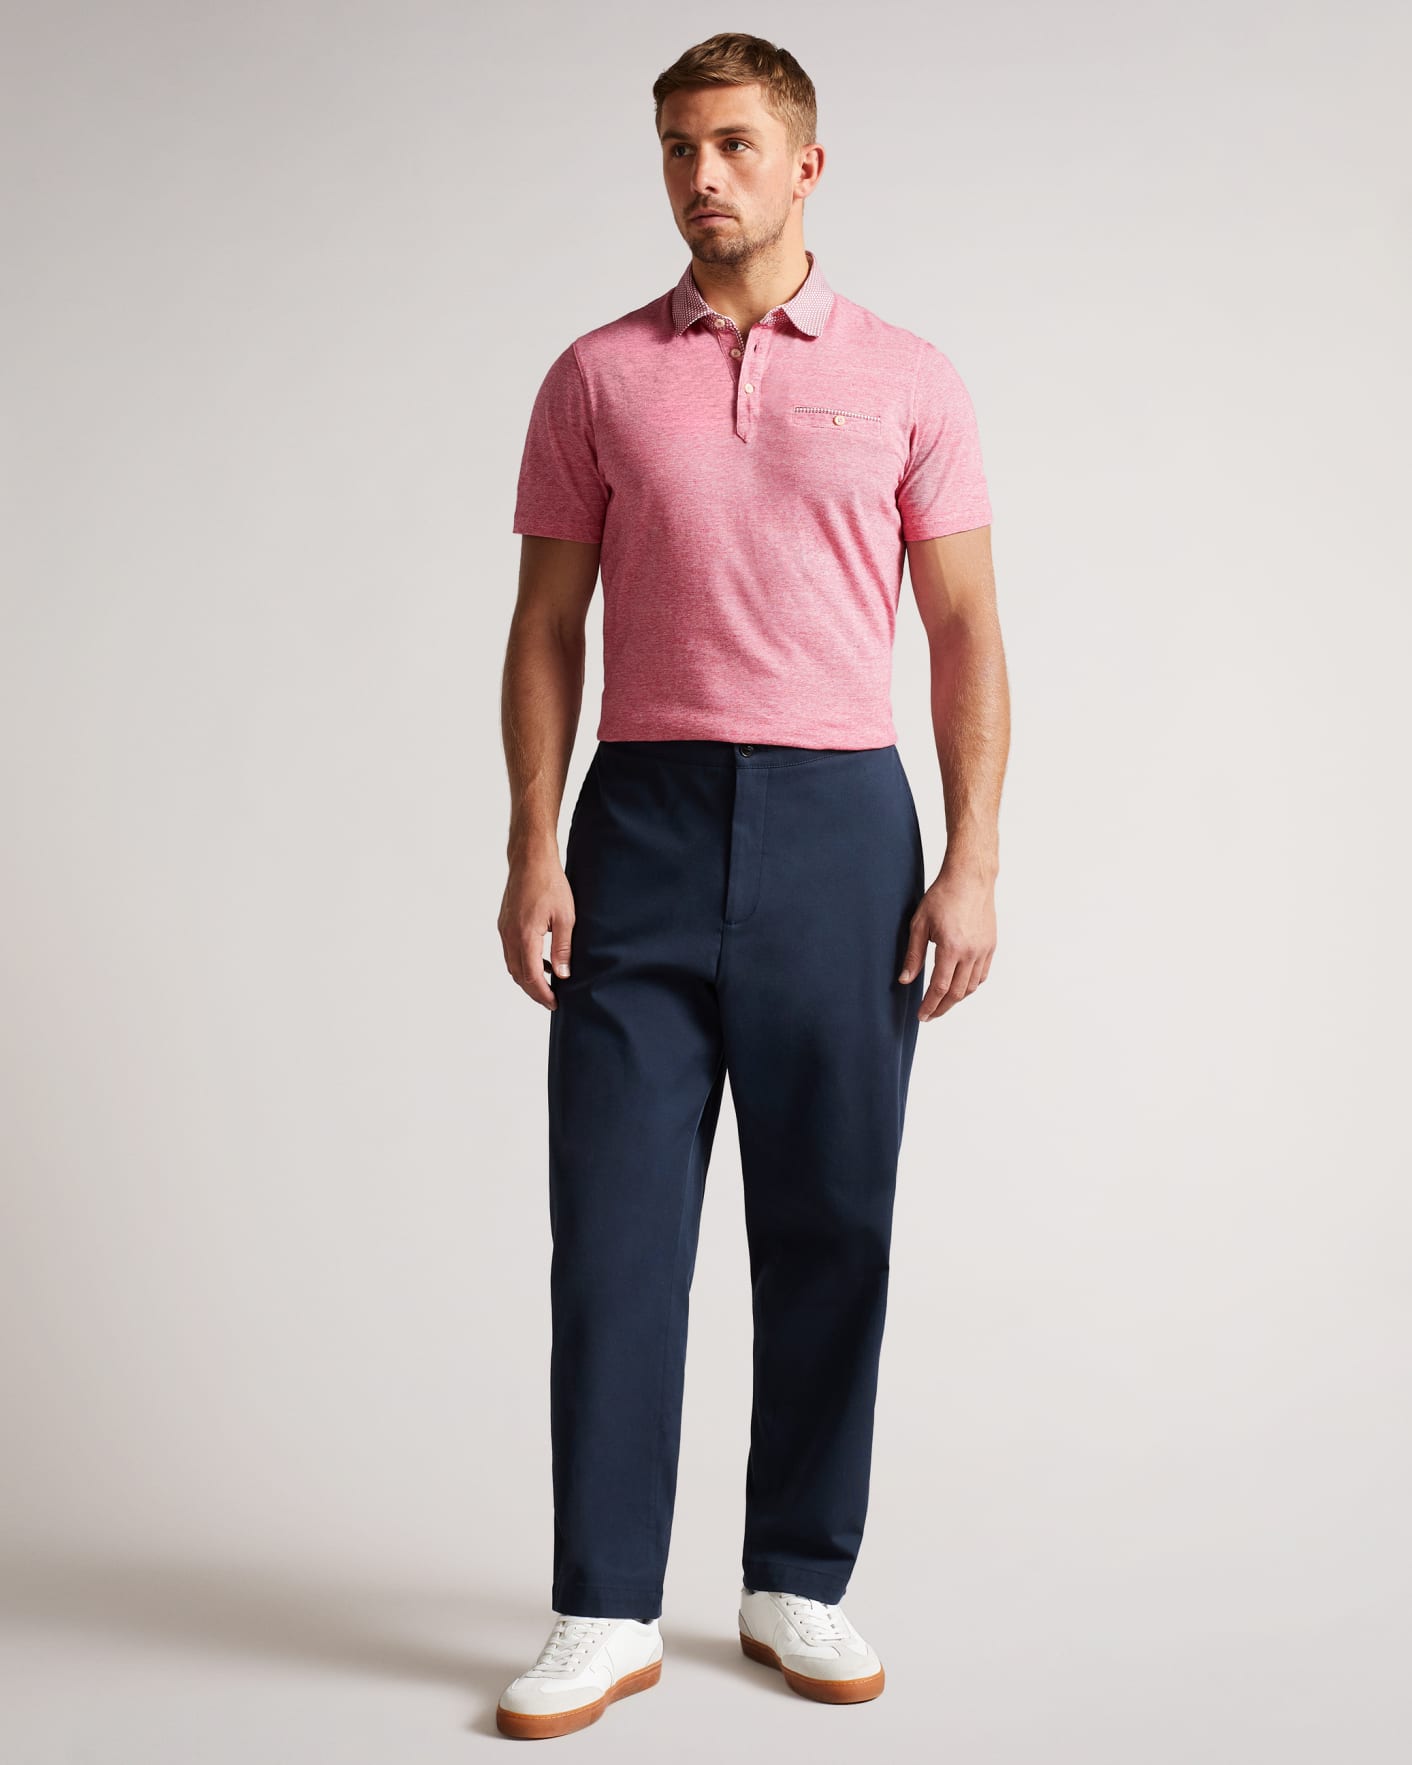 Deep-Pink Woven Collar 1x1 Stripe Short Sleeve Polo Ted Baker